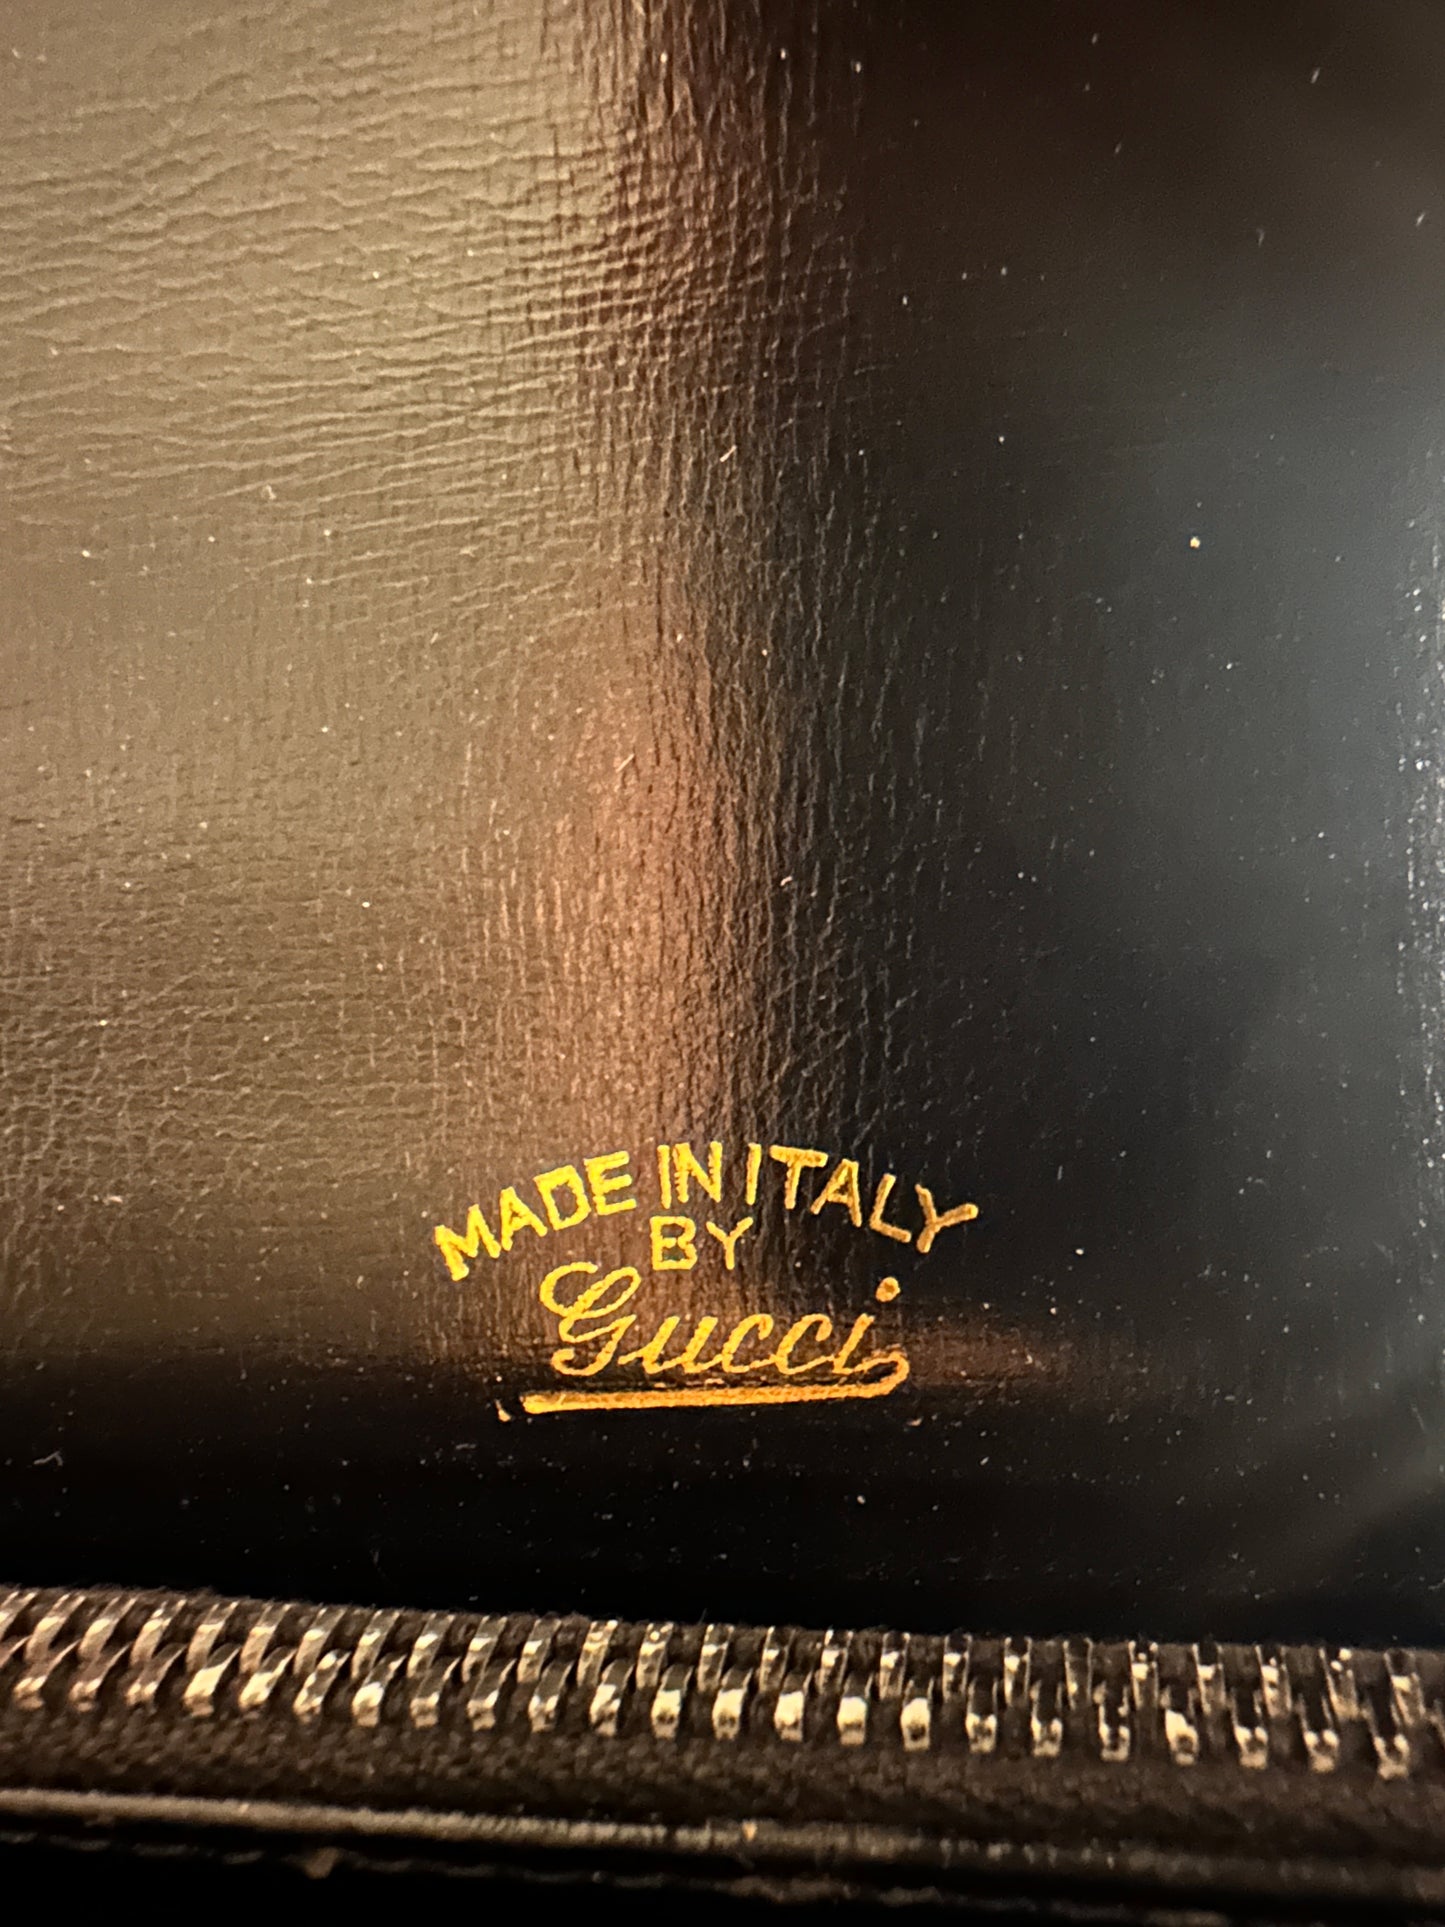 GUCCI VINTAGE 100% Authentic Genuine Top Handle Handbag with GG Buckle, 1980's, Good Condition